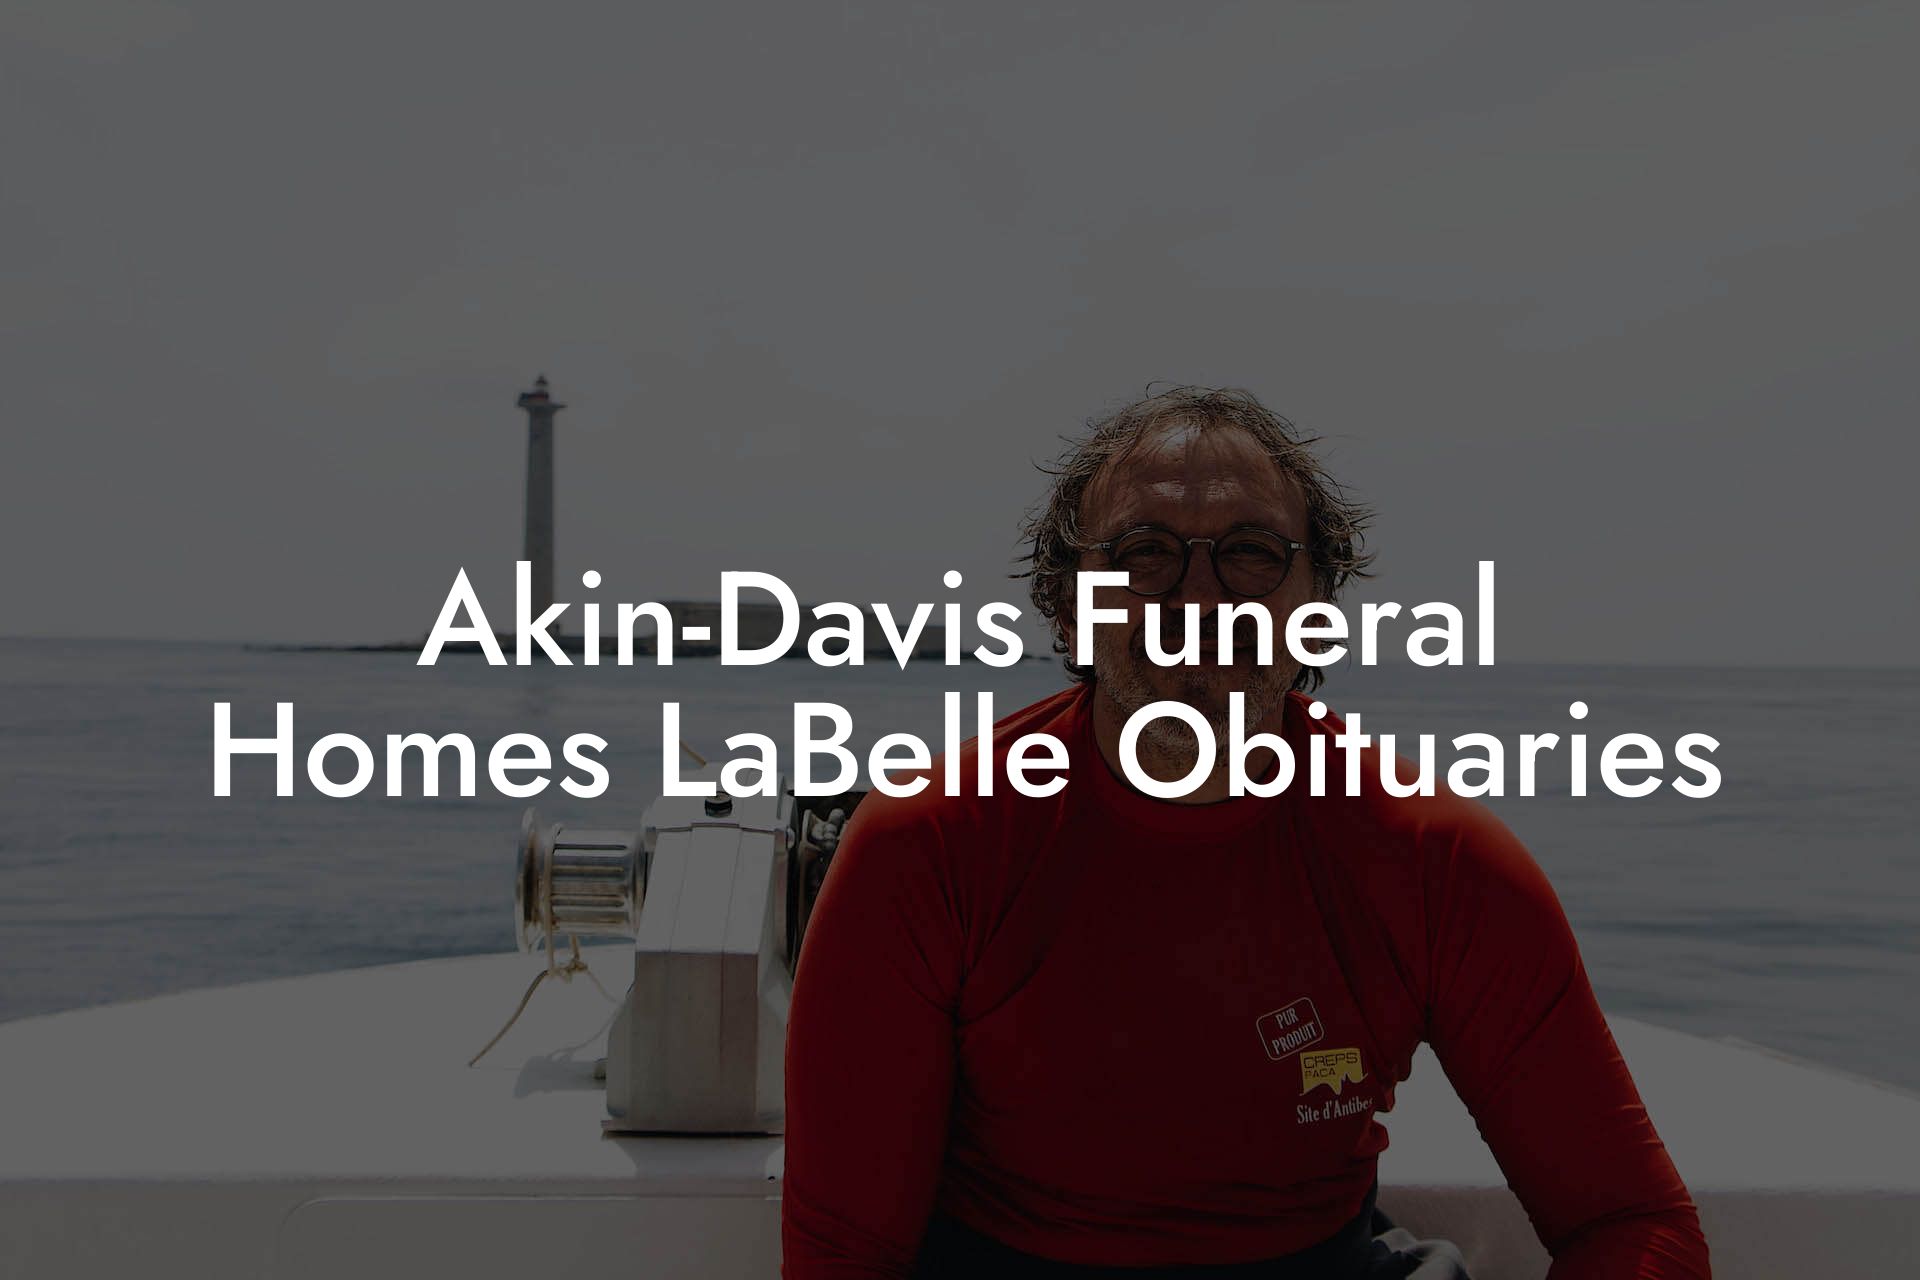 Akin-Davis Funeral Homes LaBelle Obituaries